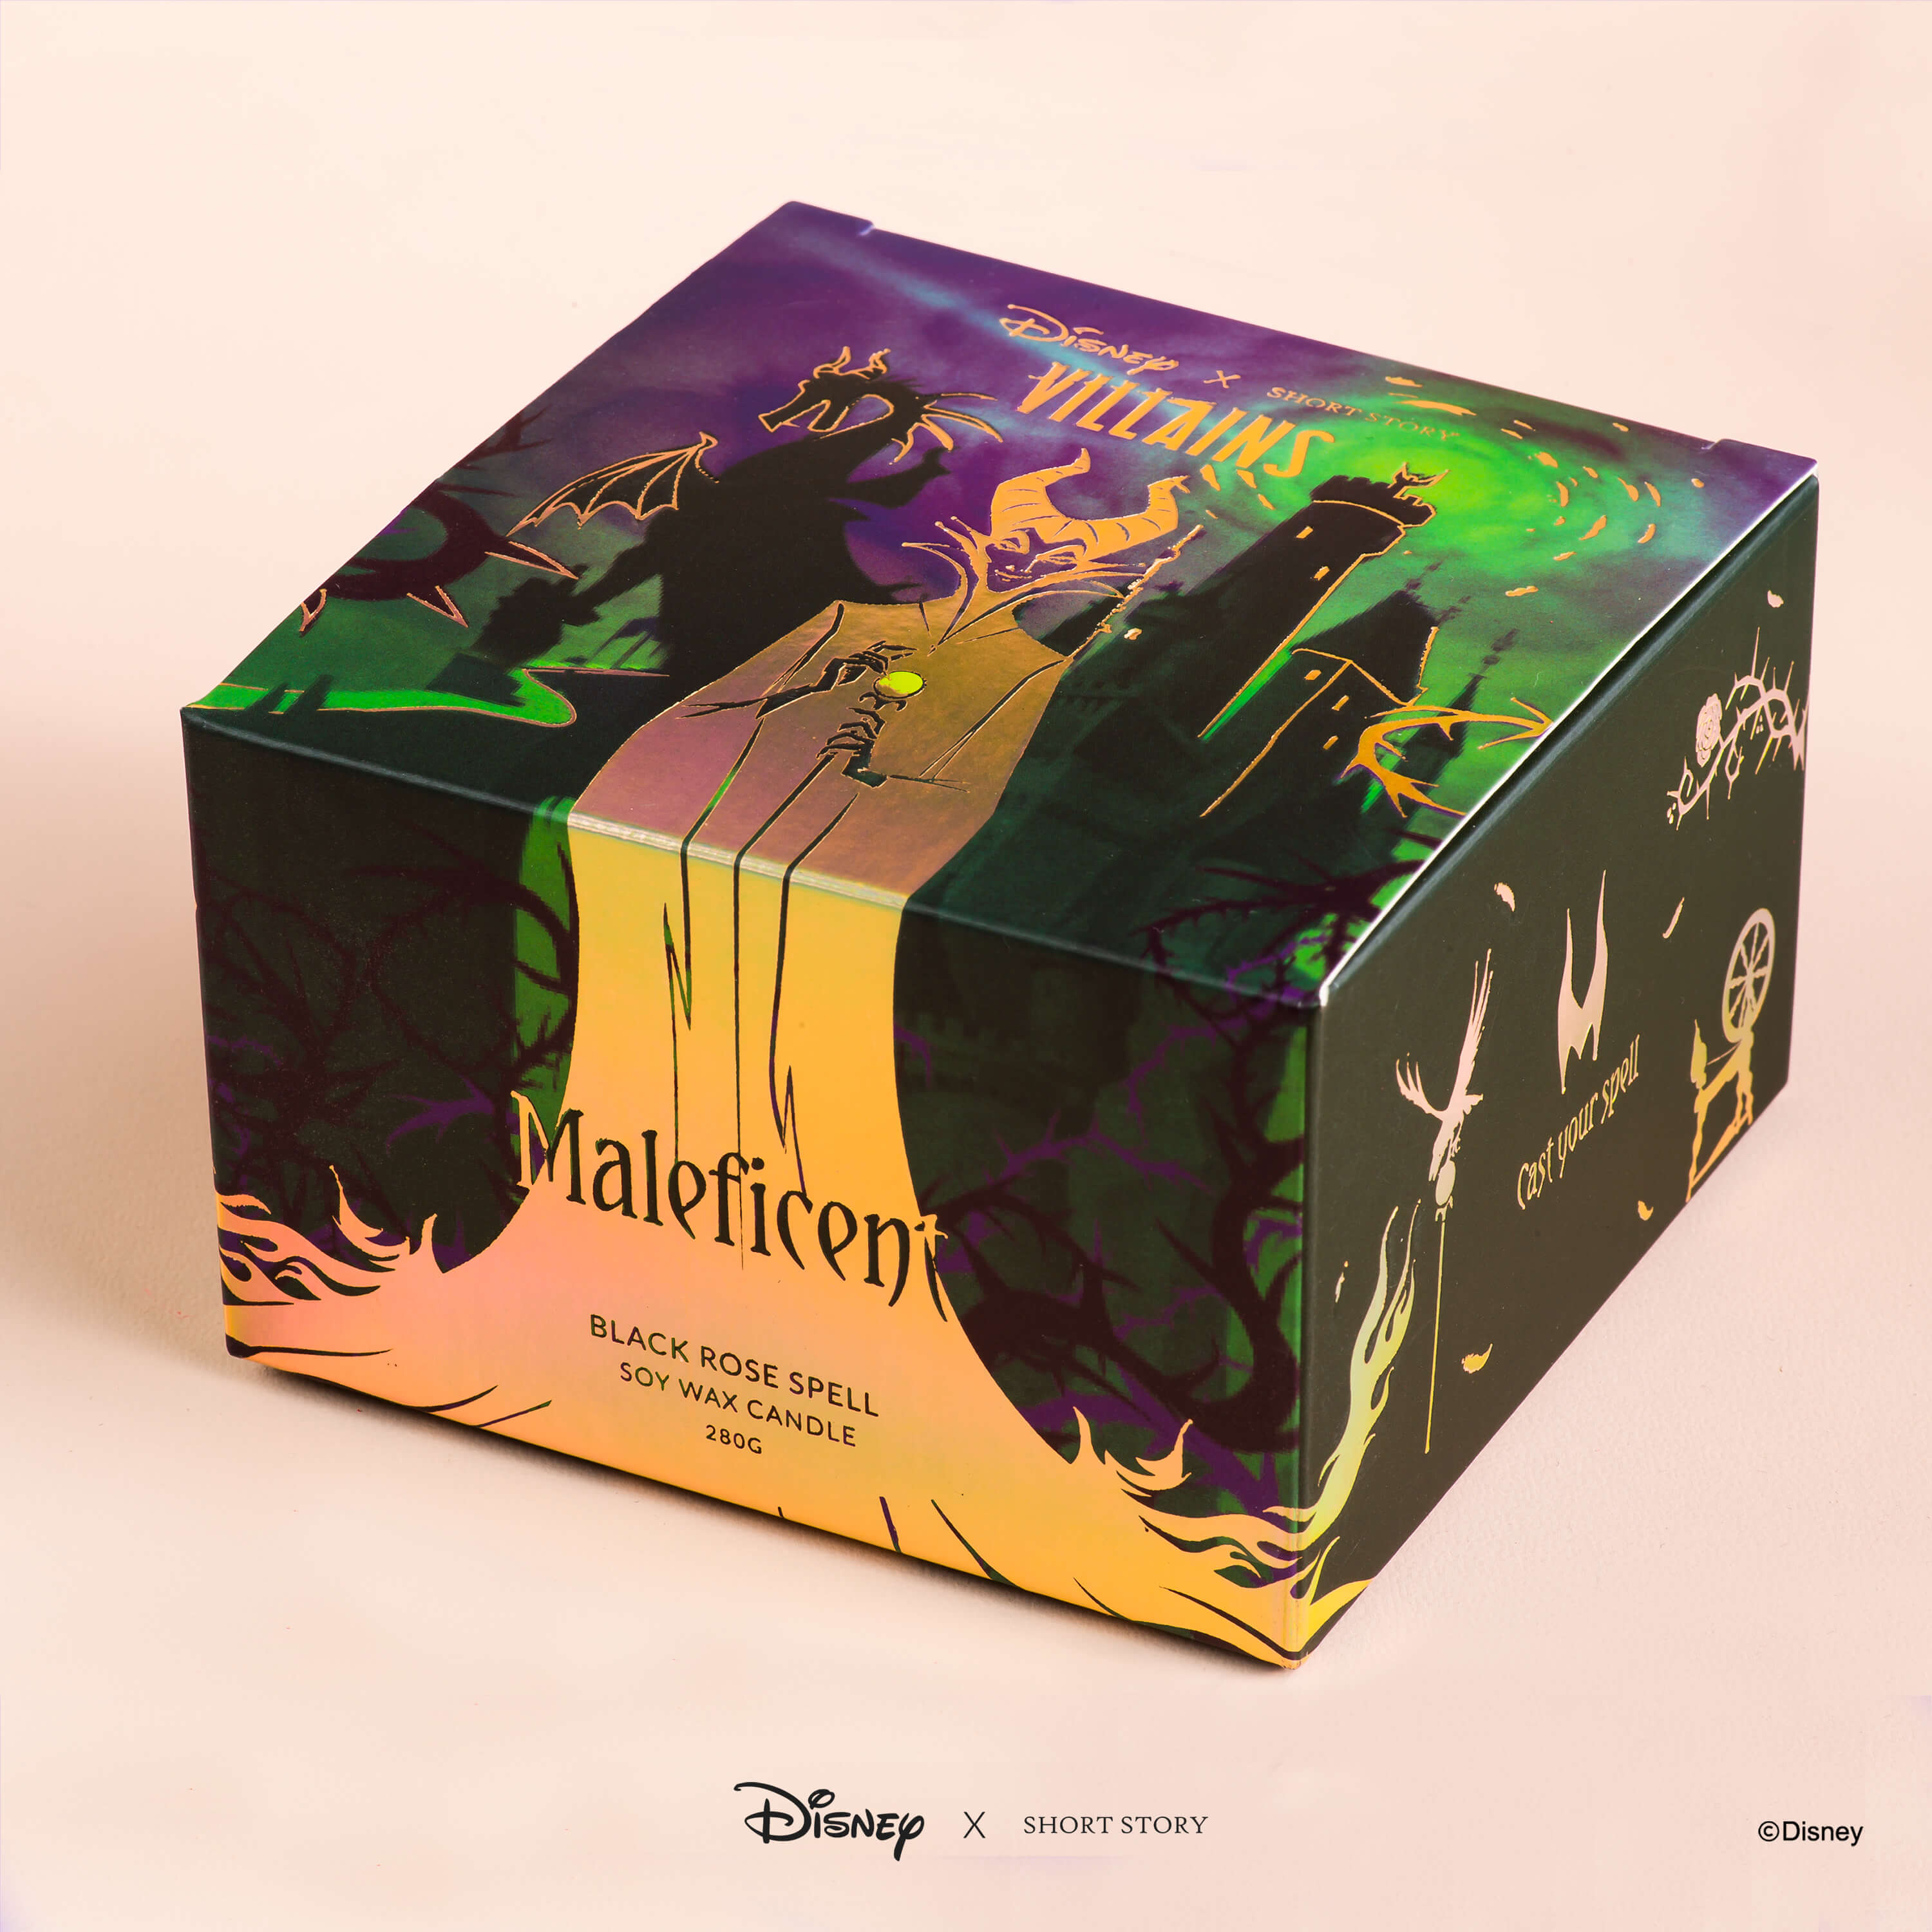 Disney Villains Fragrance Collection Pack